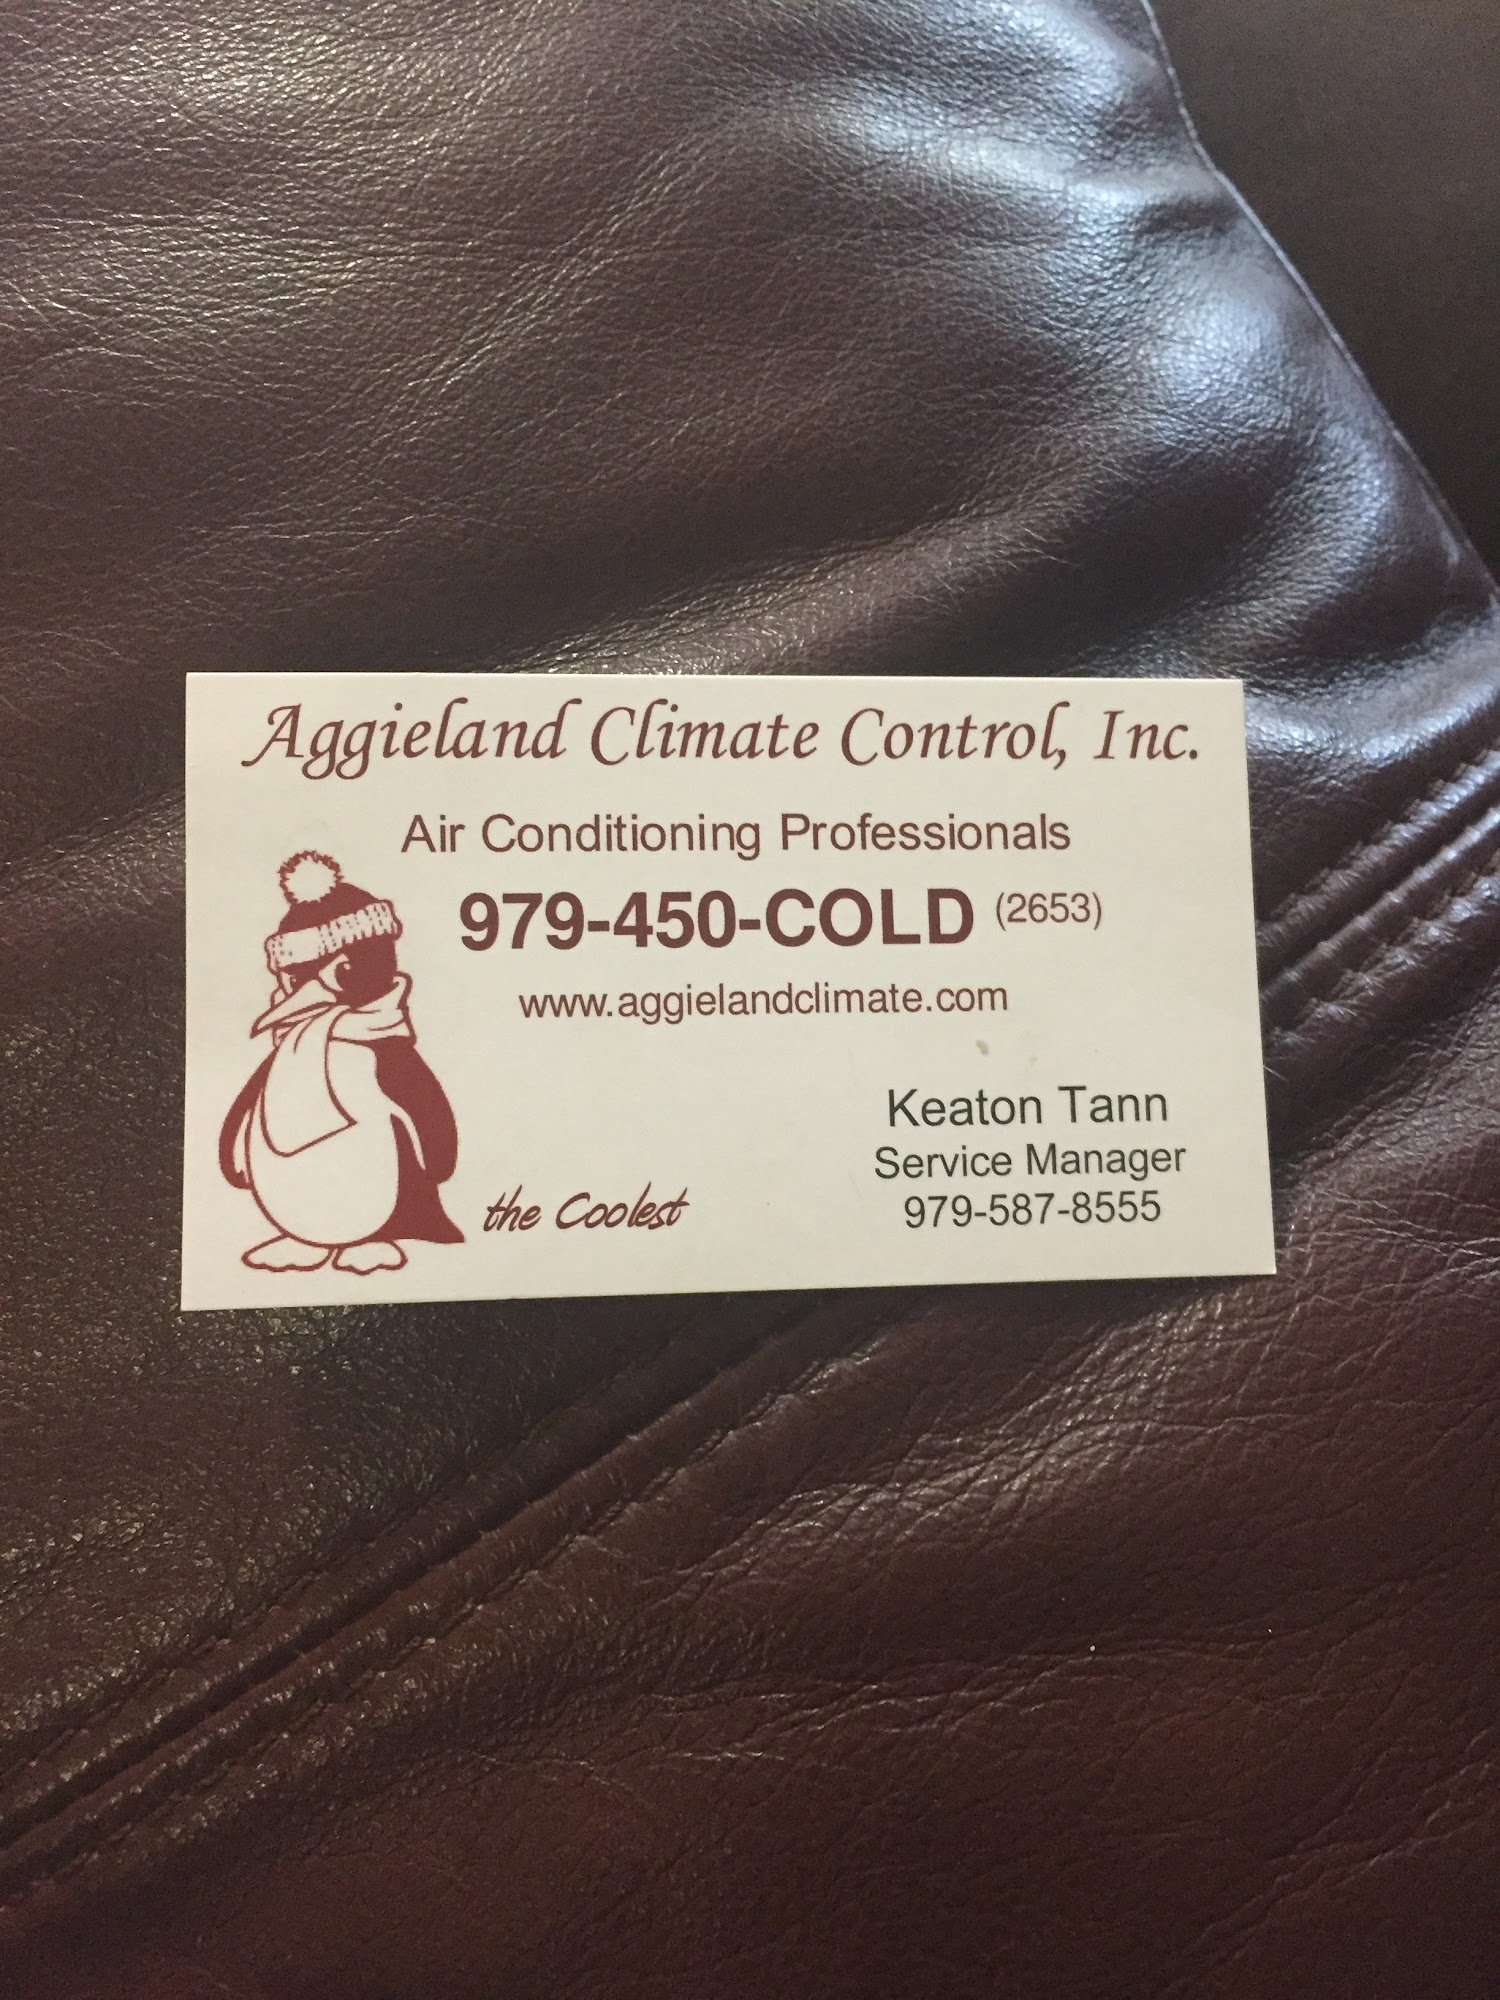 Aggieland Climate Control, Inc